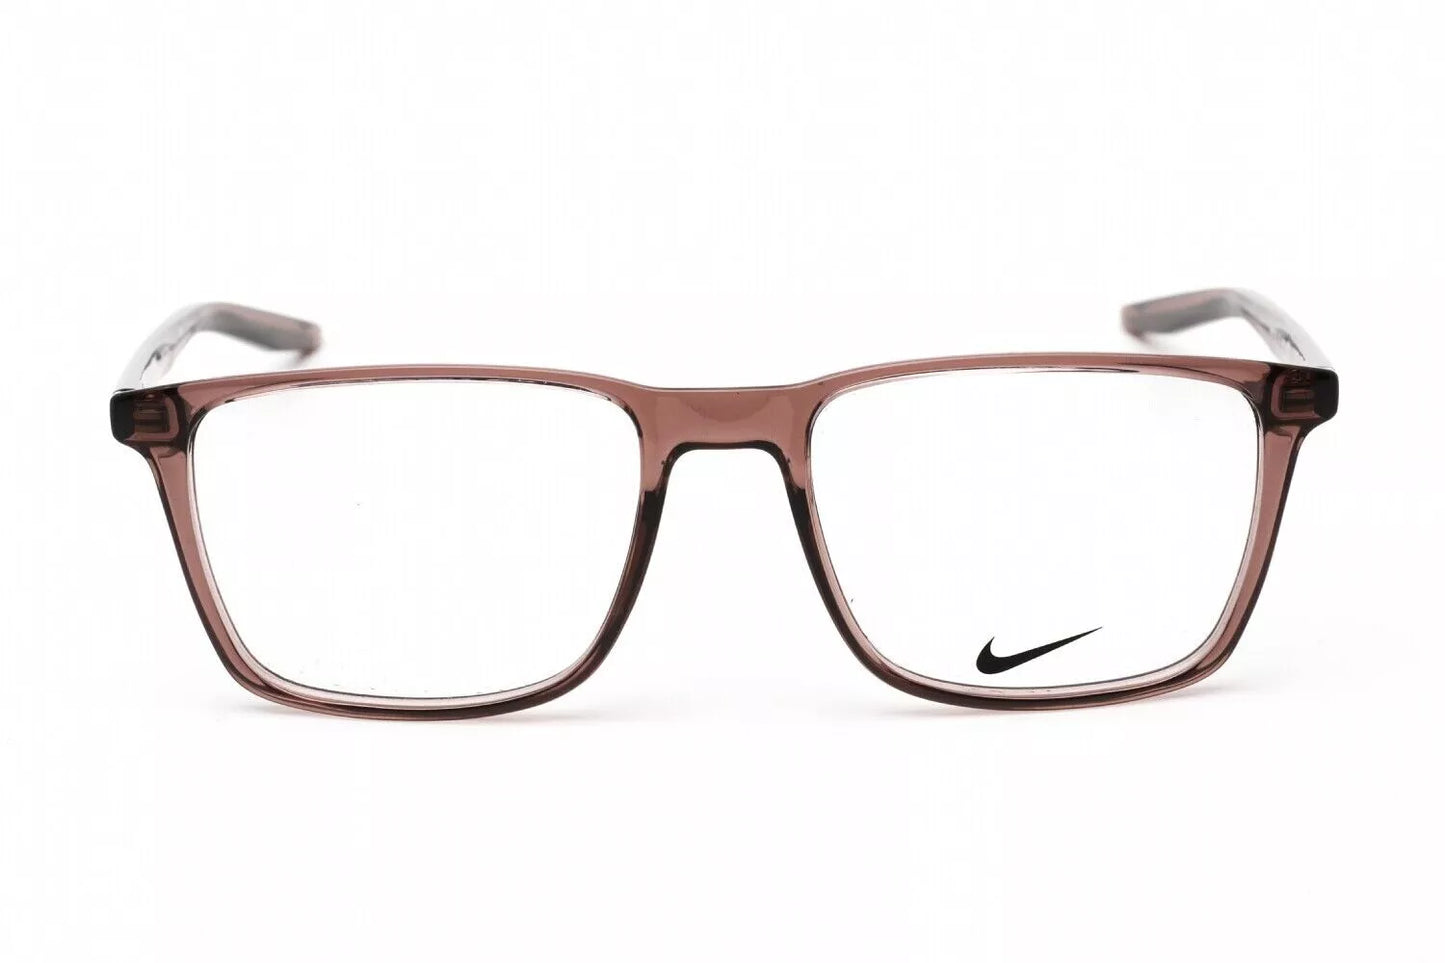 Nike NIKE-7130-201-54 00mm New Eyeglasses